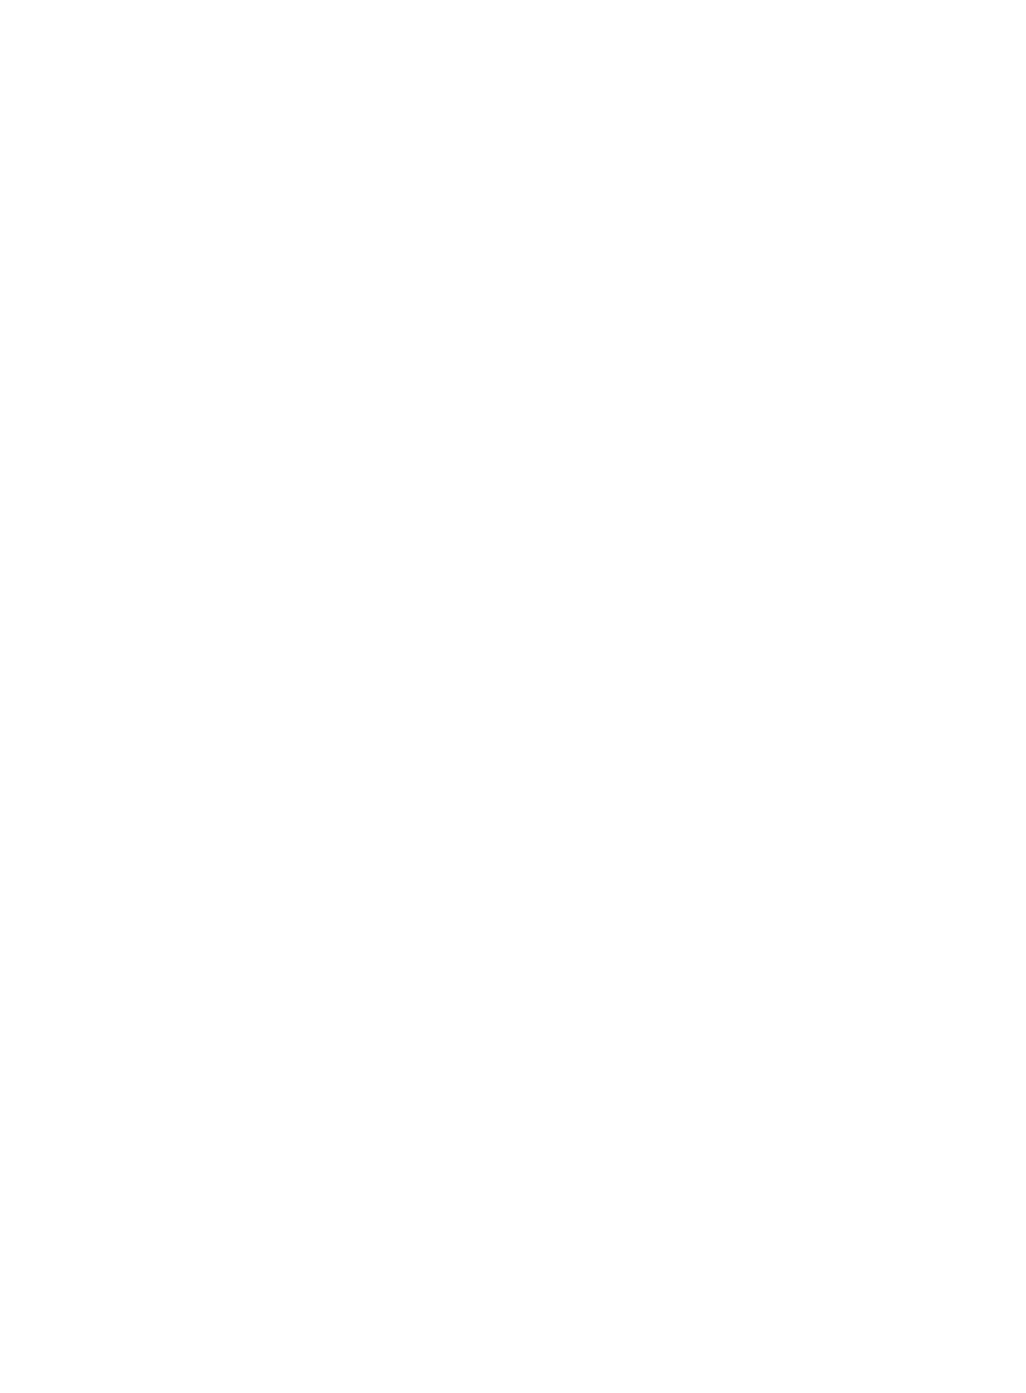 BUILT FOR BLAZING TRAILS